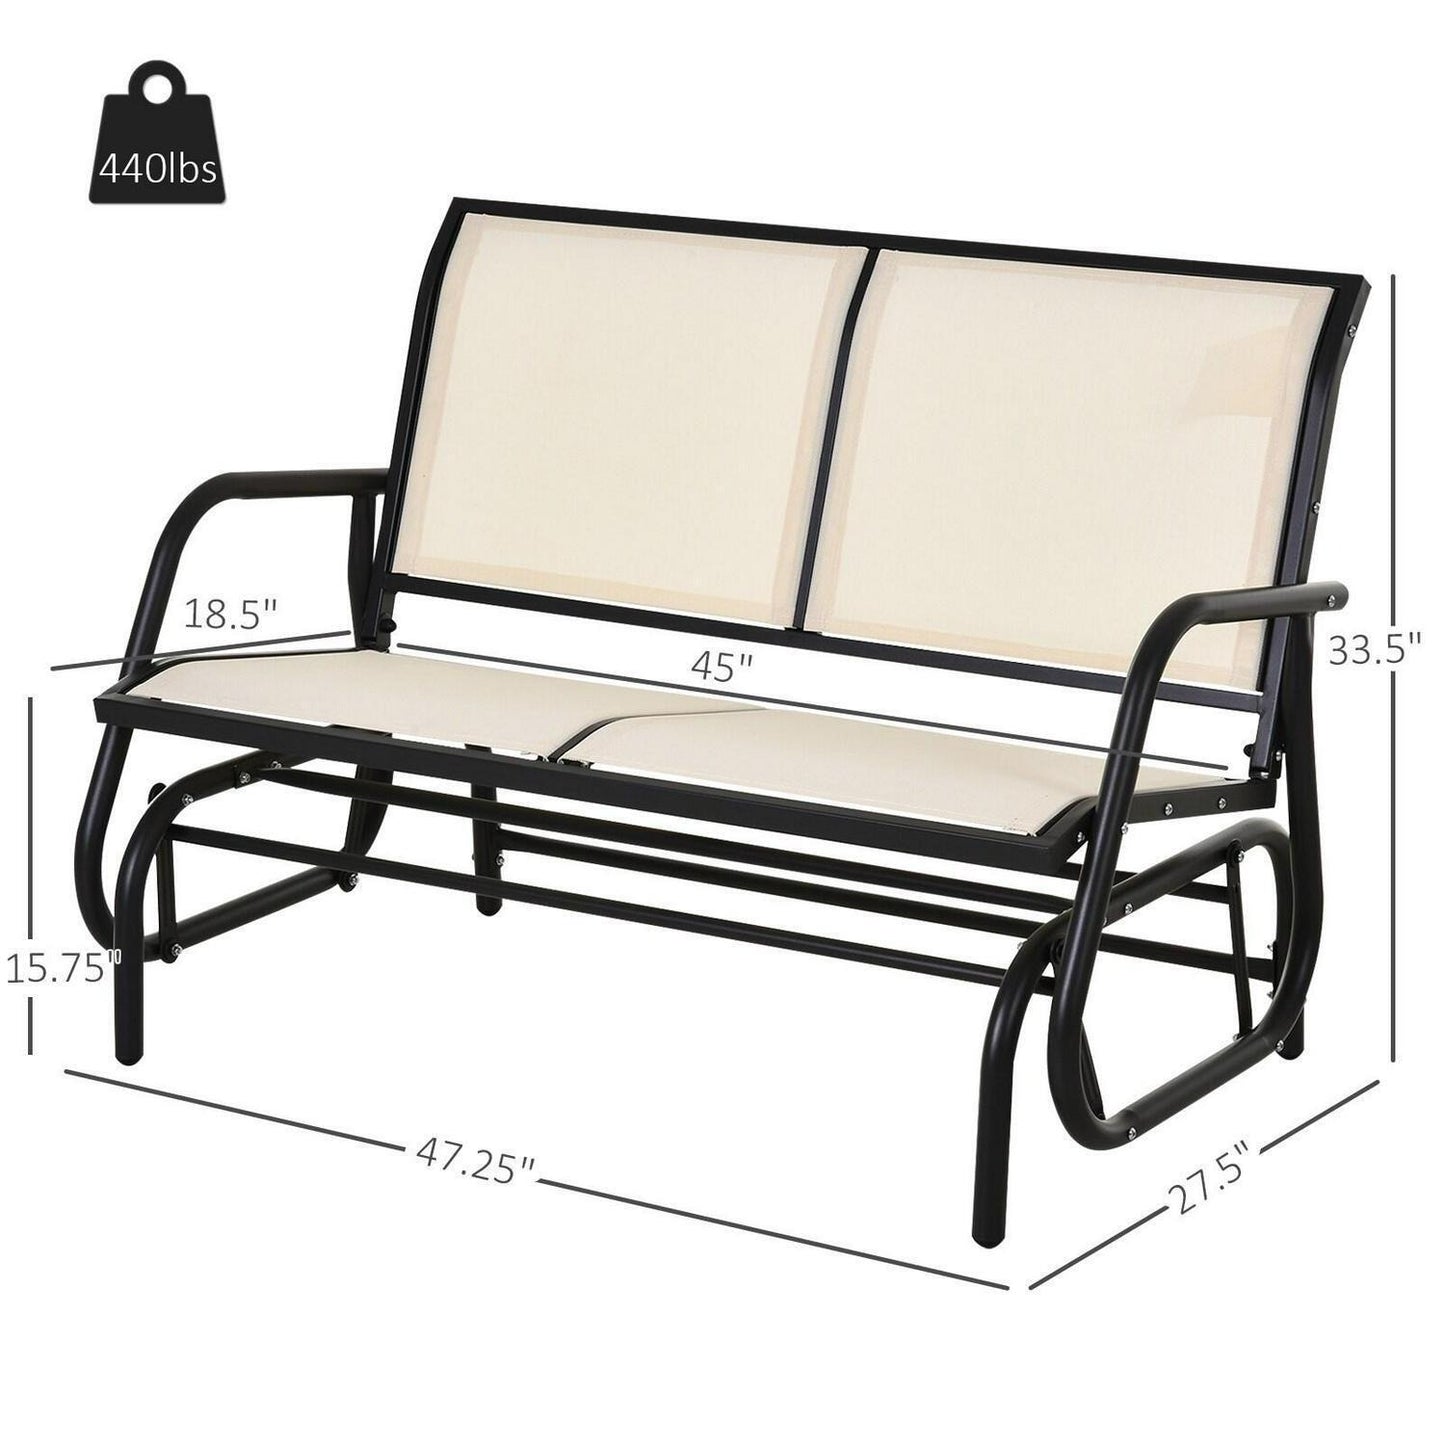 2-Person Glider Rocking Chair Bench For Patio Deck Yard in Cream White